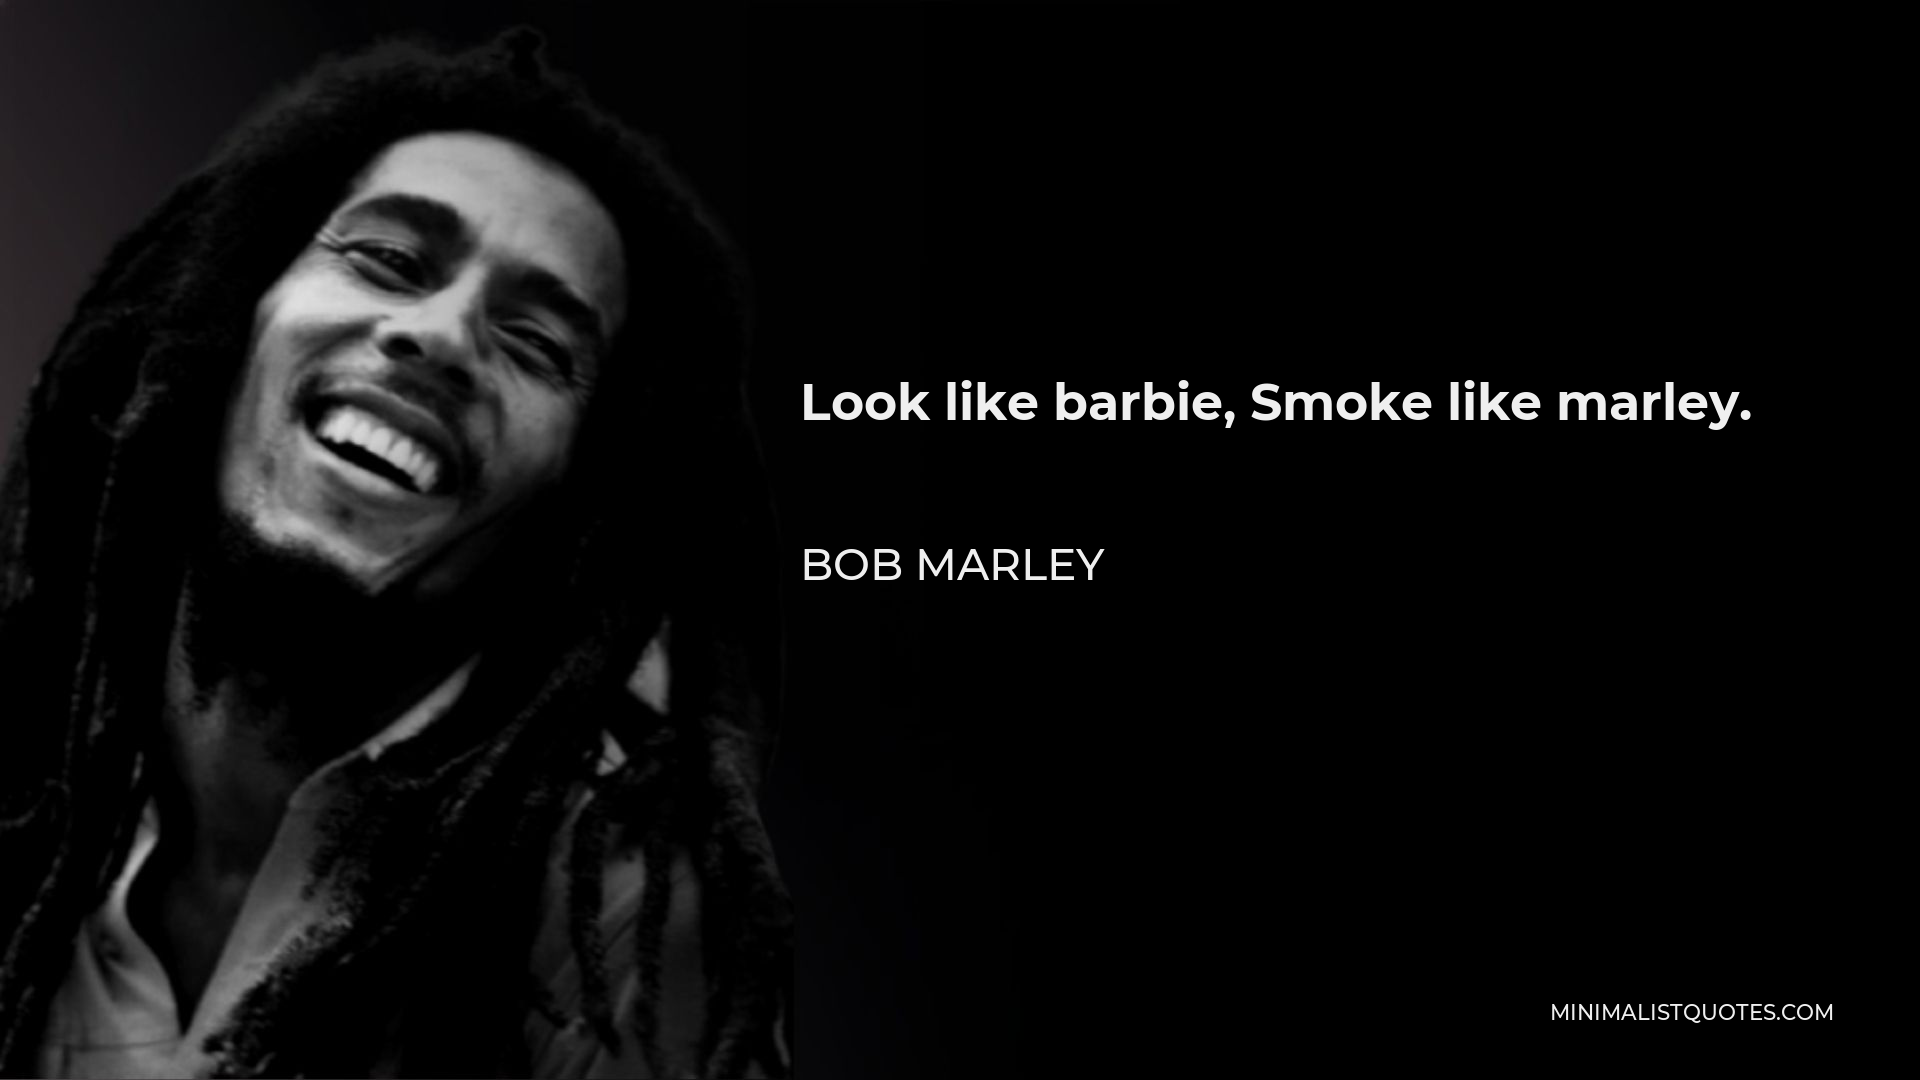 Bob Marley Quote - Look like barbie, Smoke like marley.